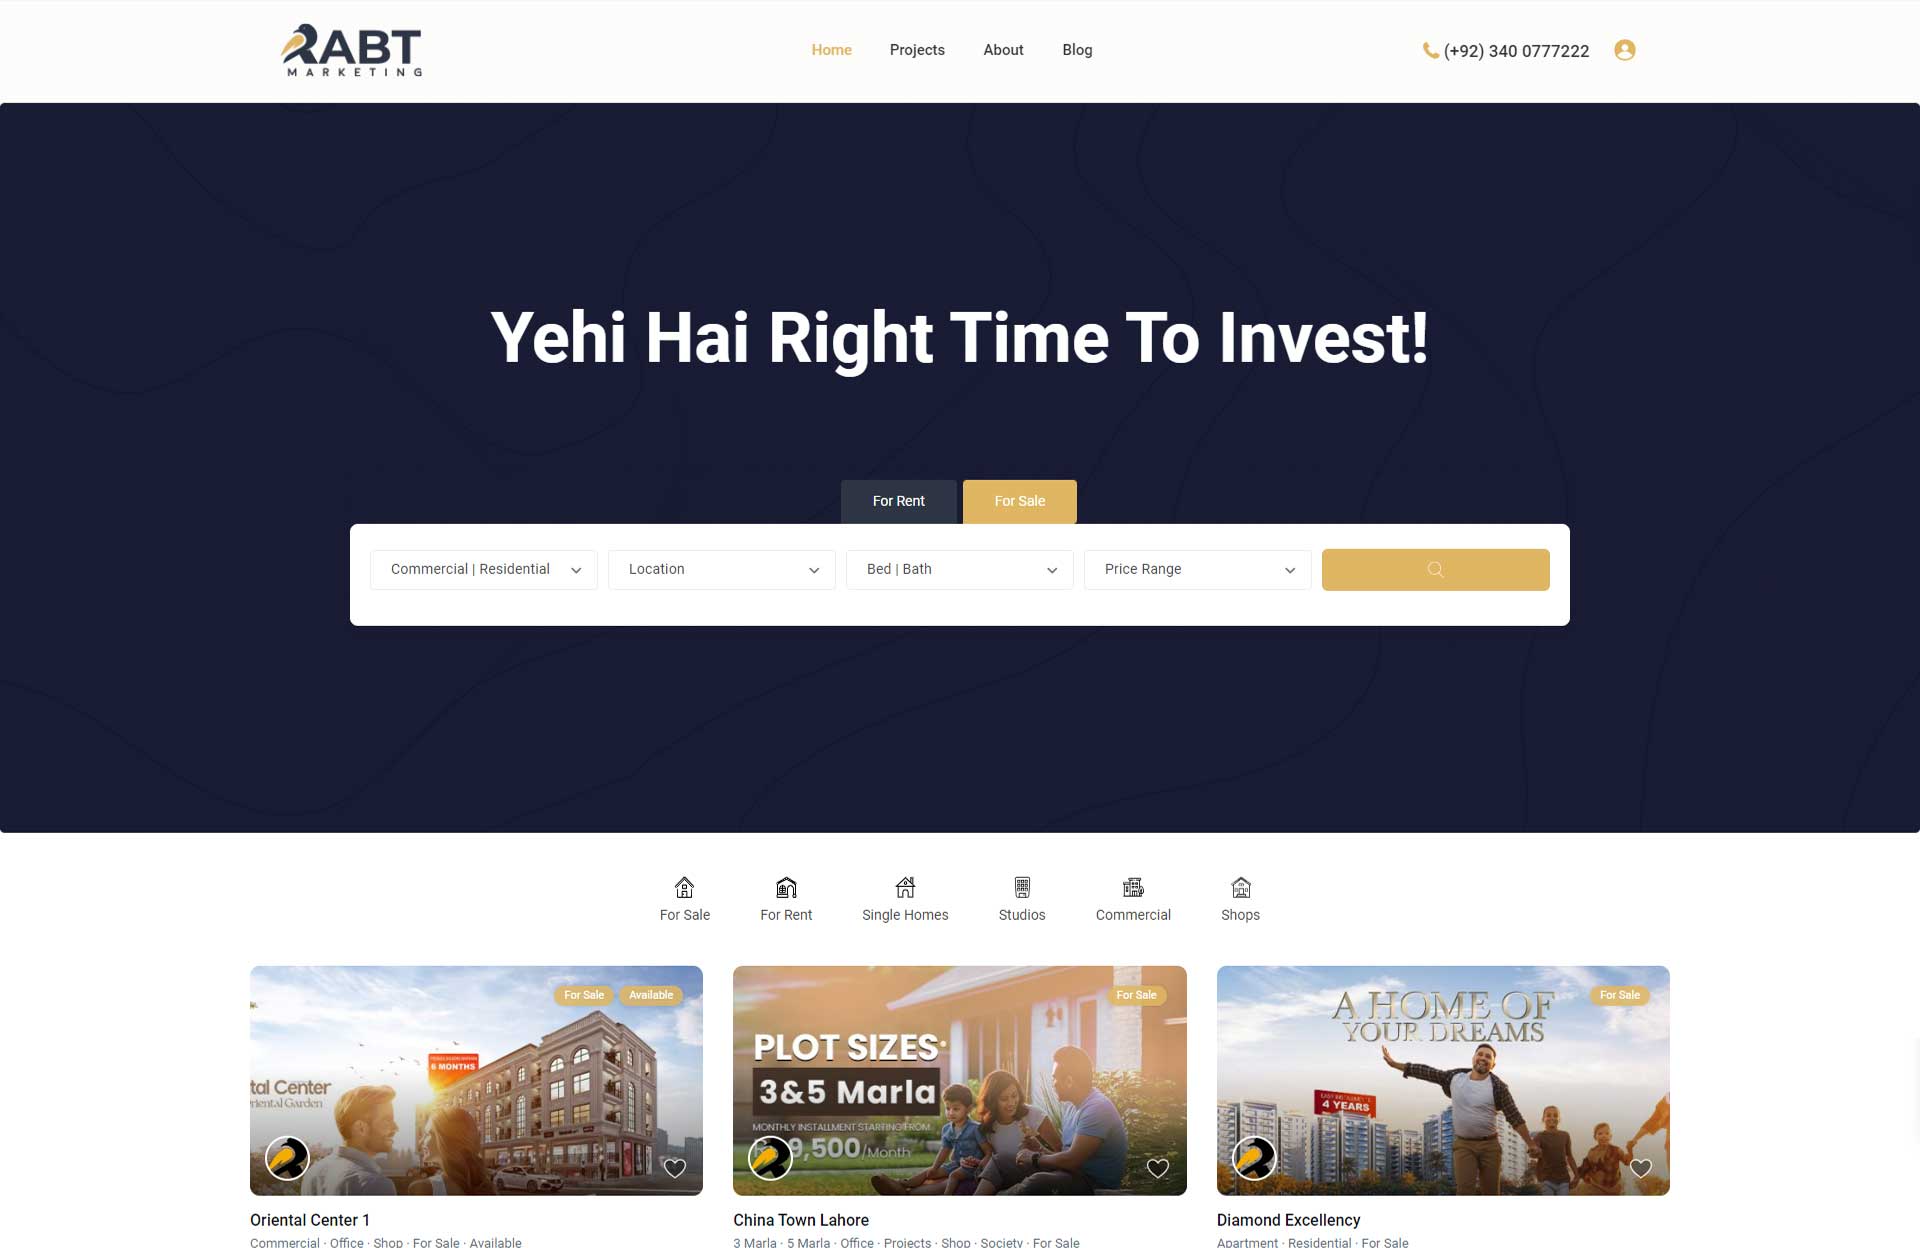 rabtmarketing real estate website develop by hamza tariq